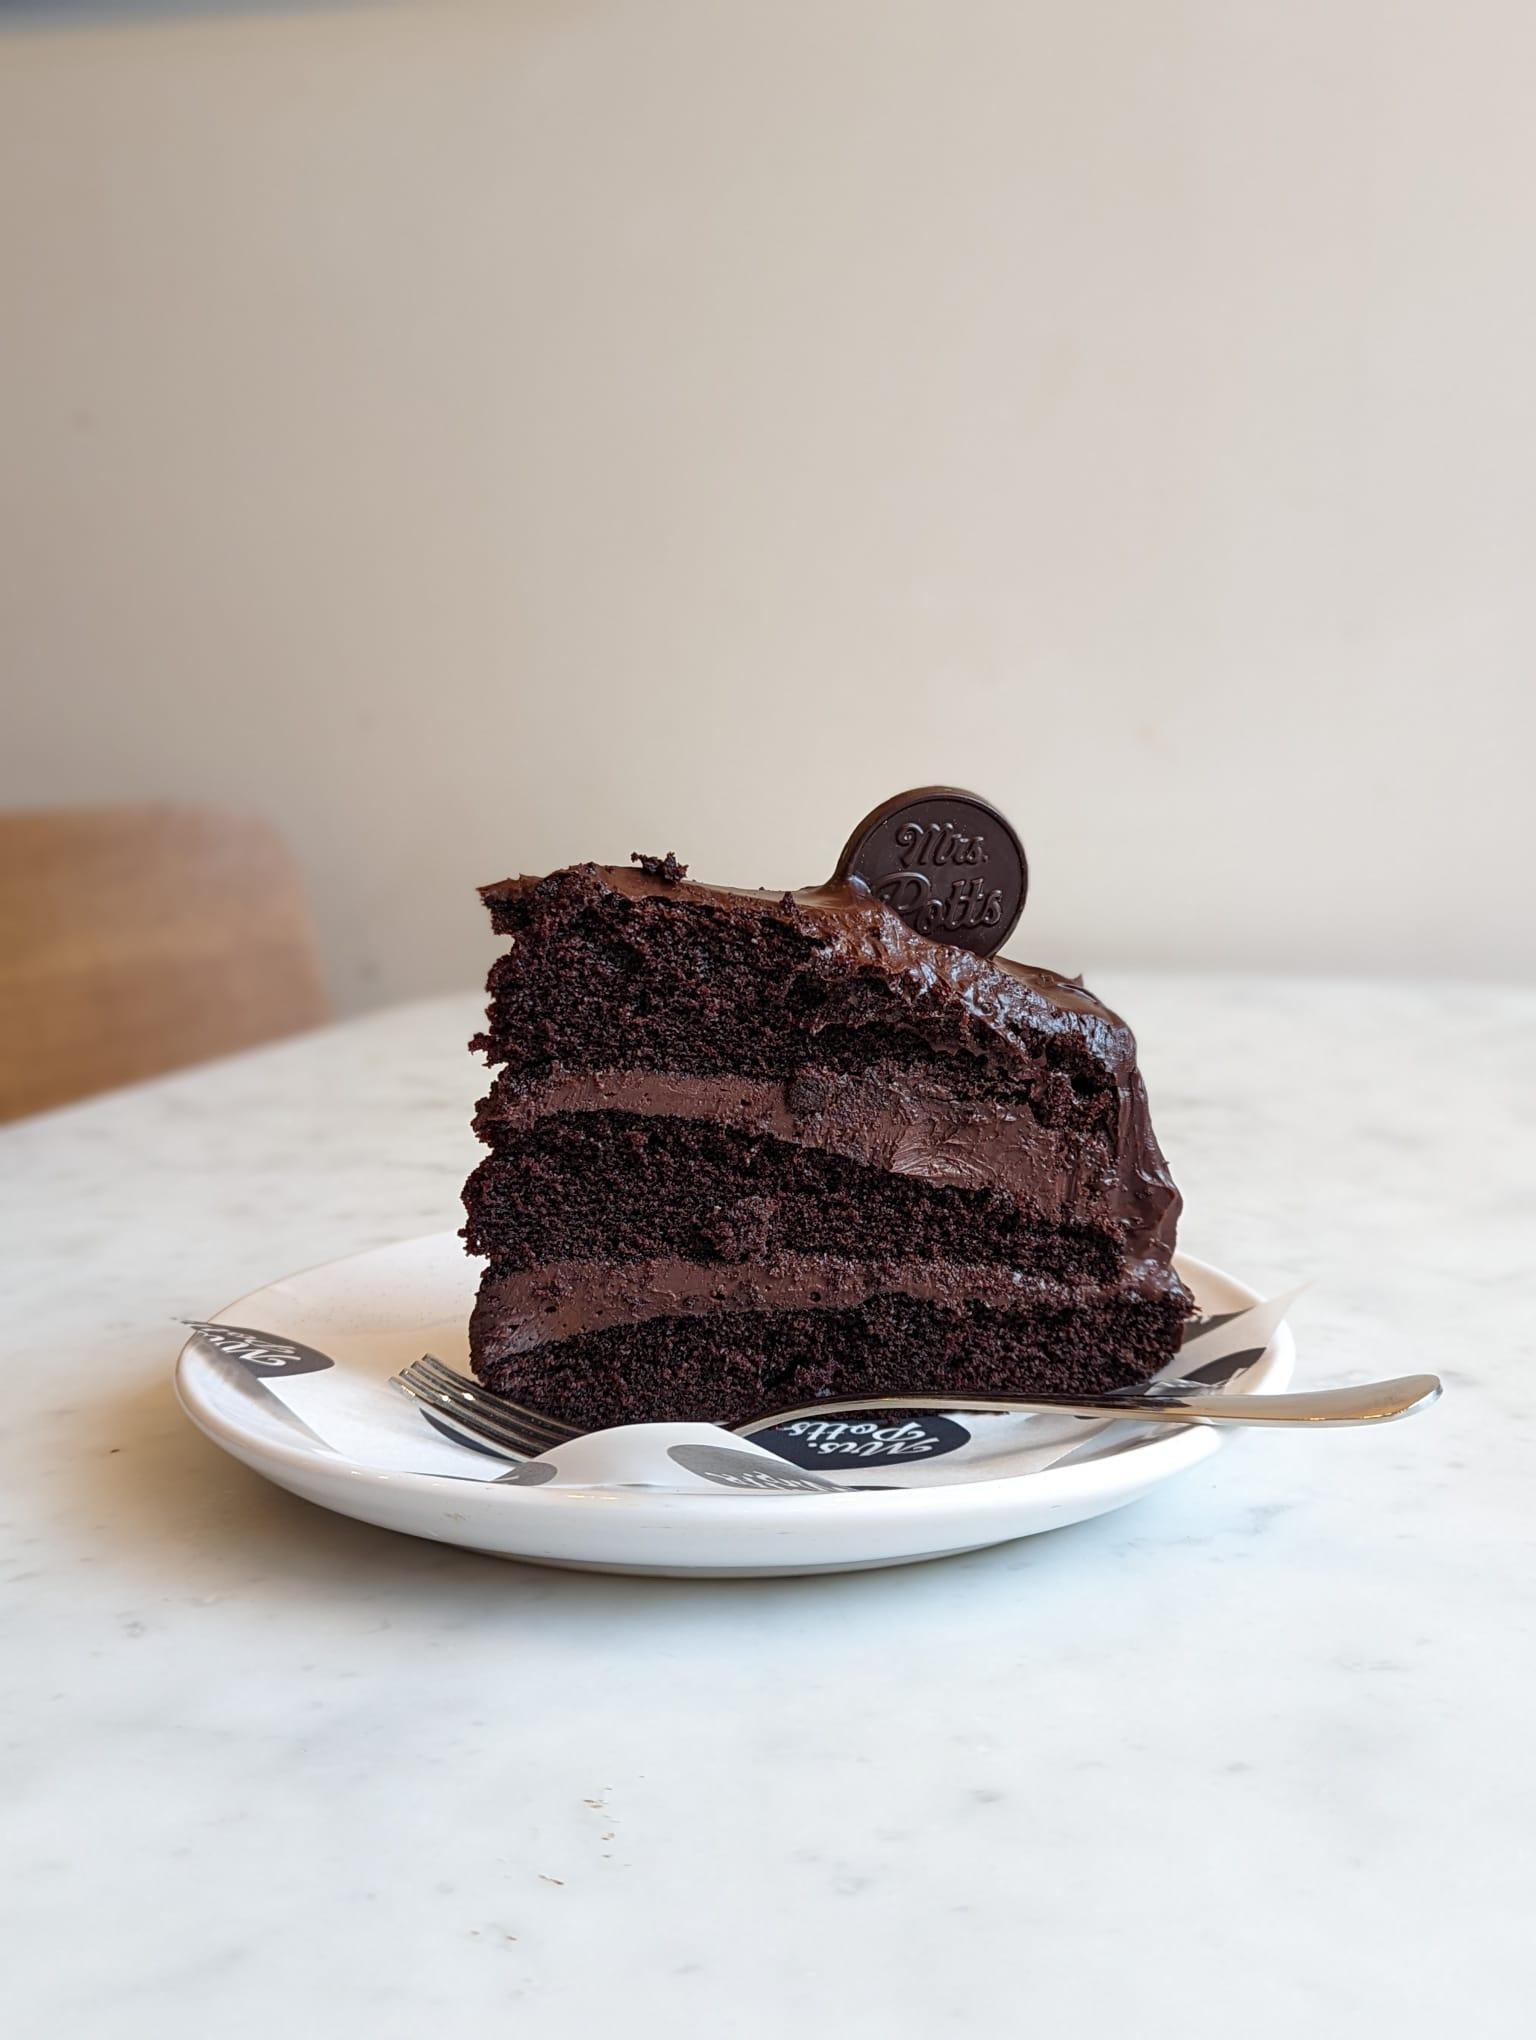 Get Baked Bakery Leeds: Massive Bruce Chocolate Cake